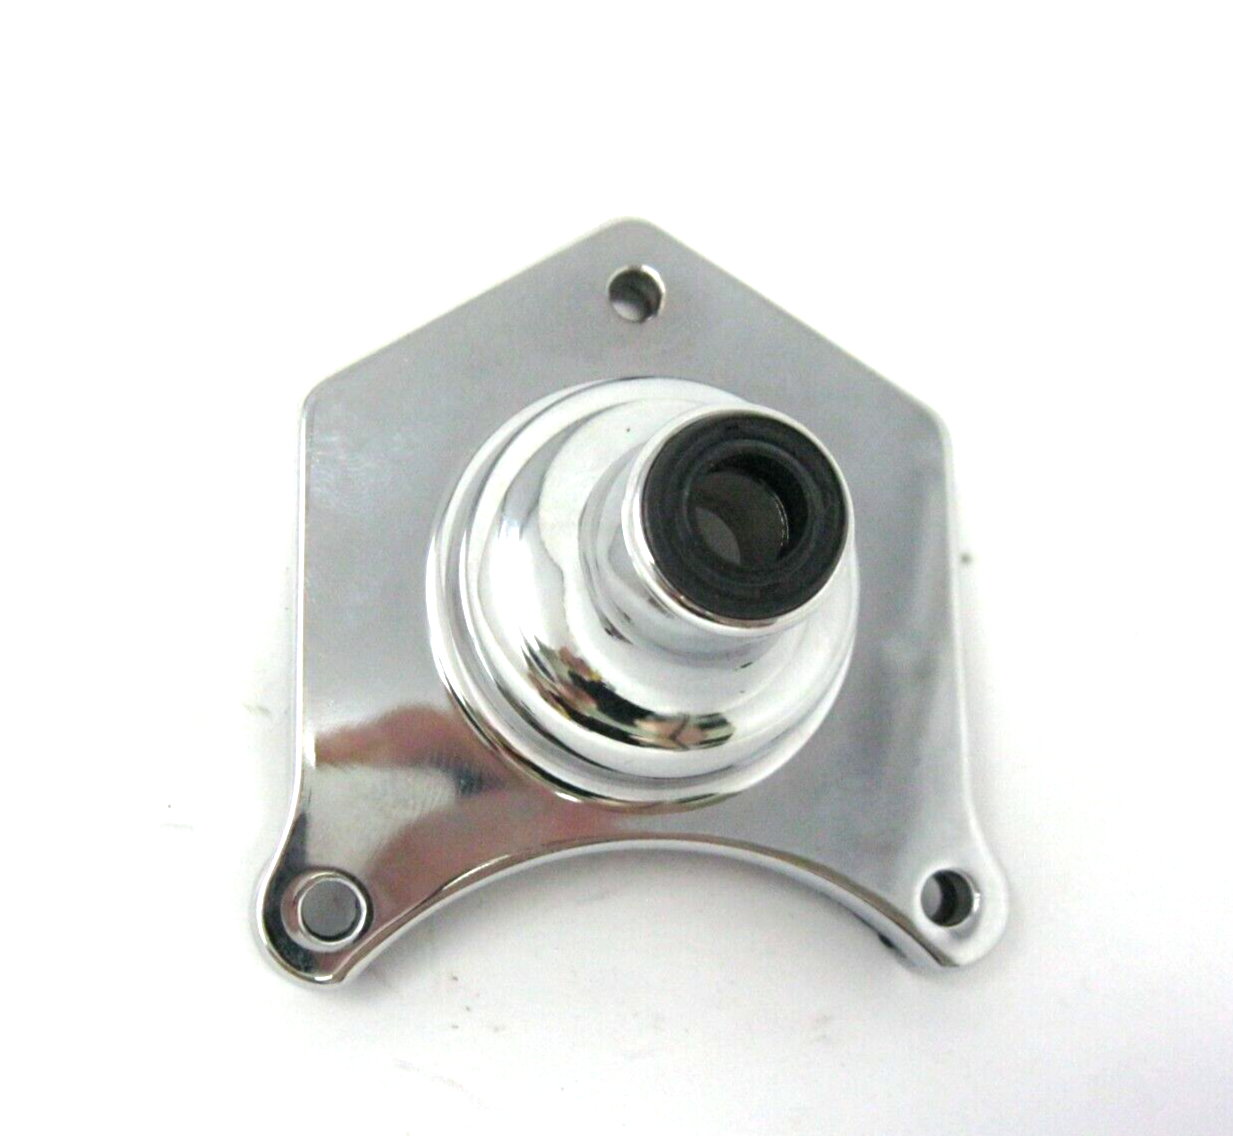 Spyke Chrome PUSH Button KIT Starter Solenoid & Cover 1.0/2.0/2.4/2.6kW 400217